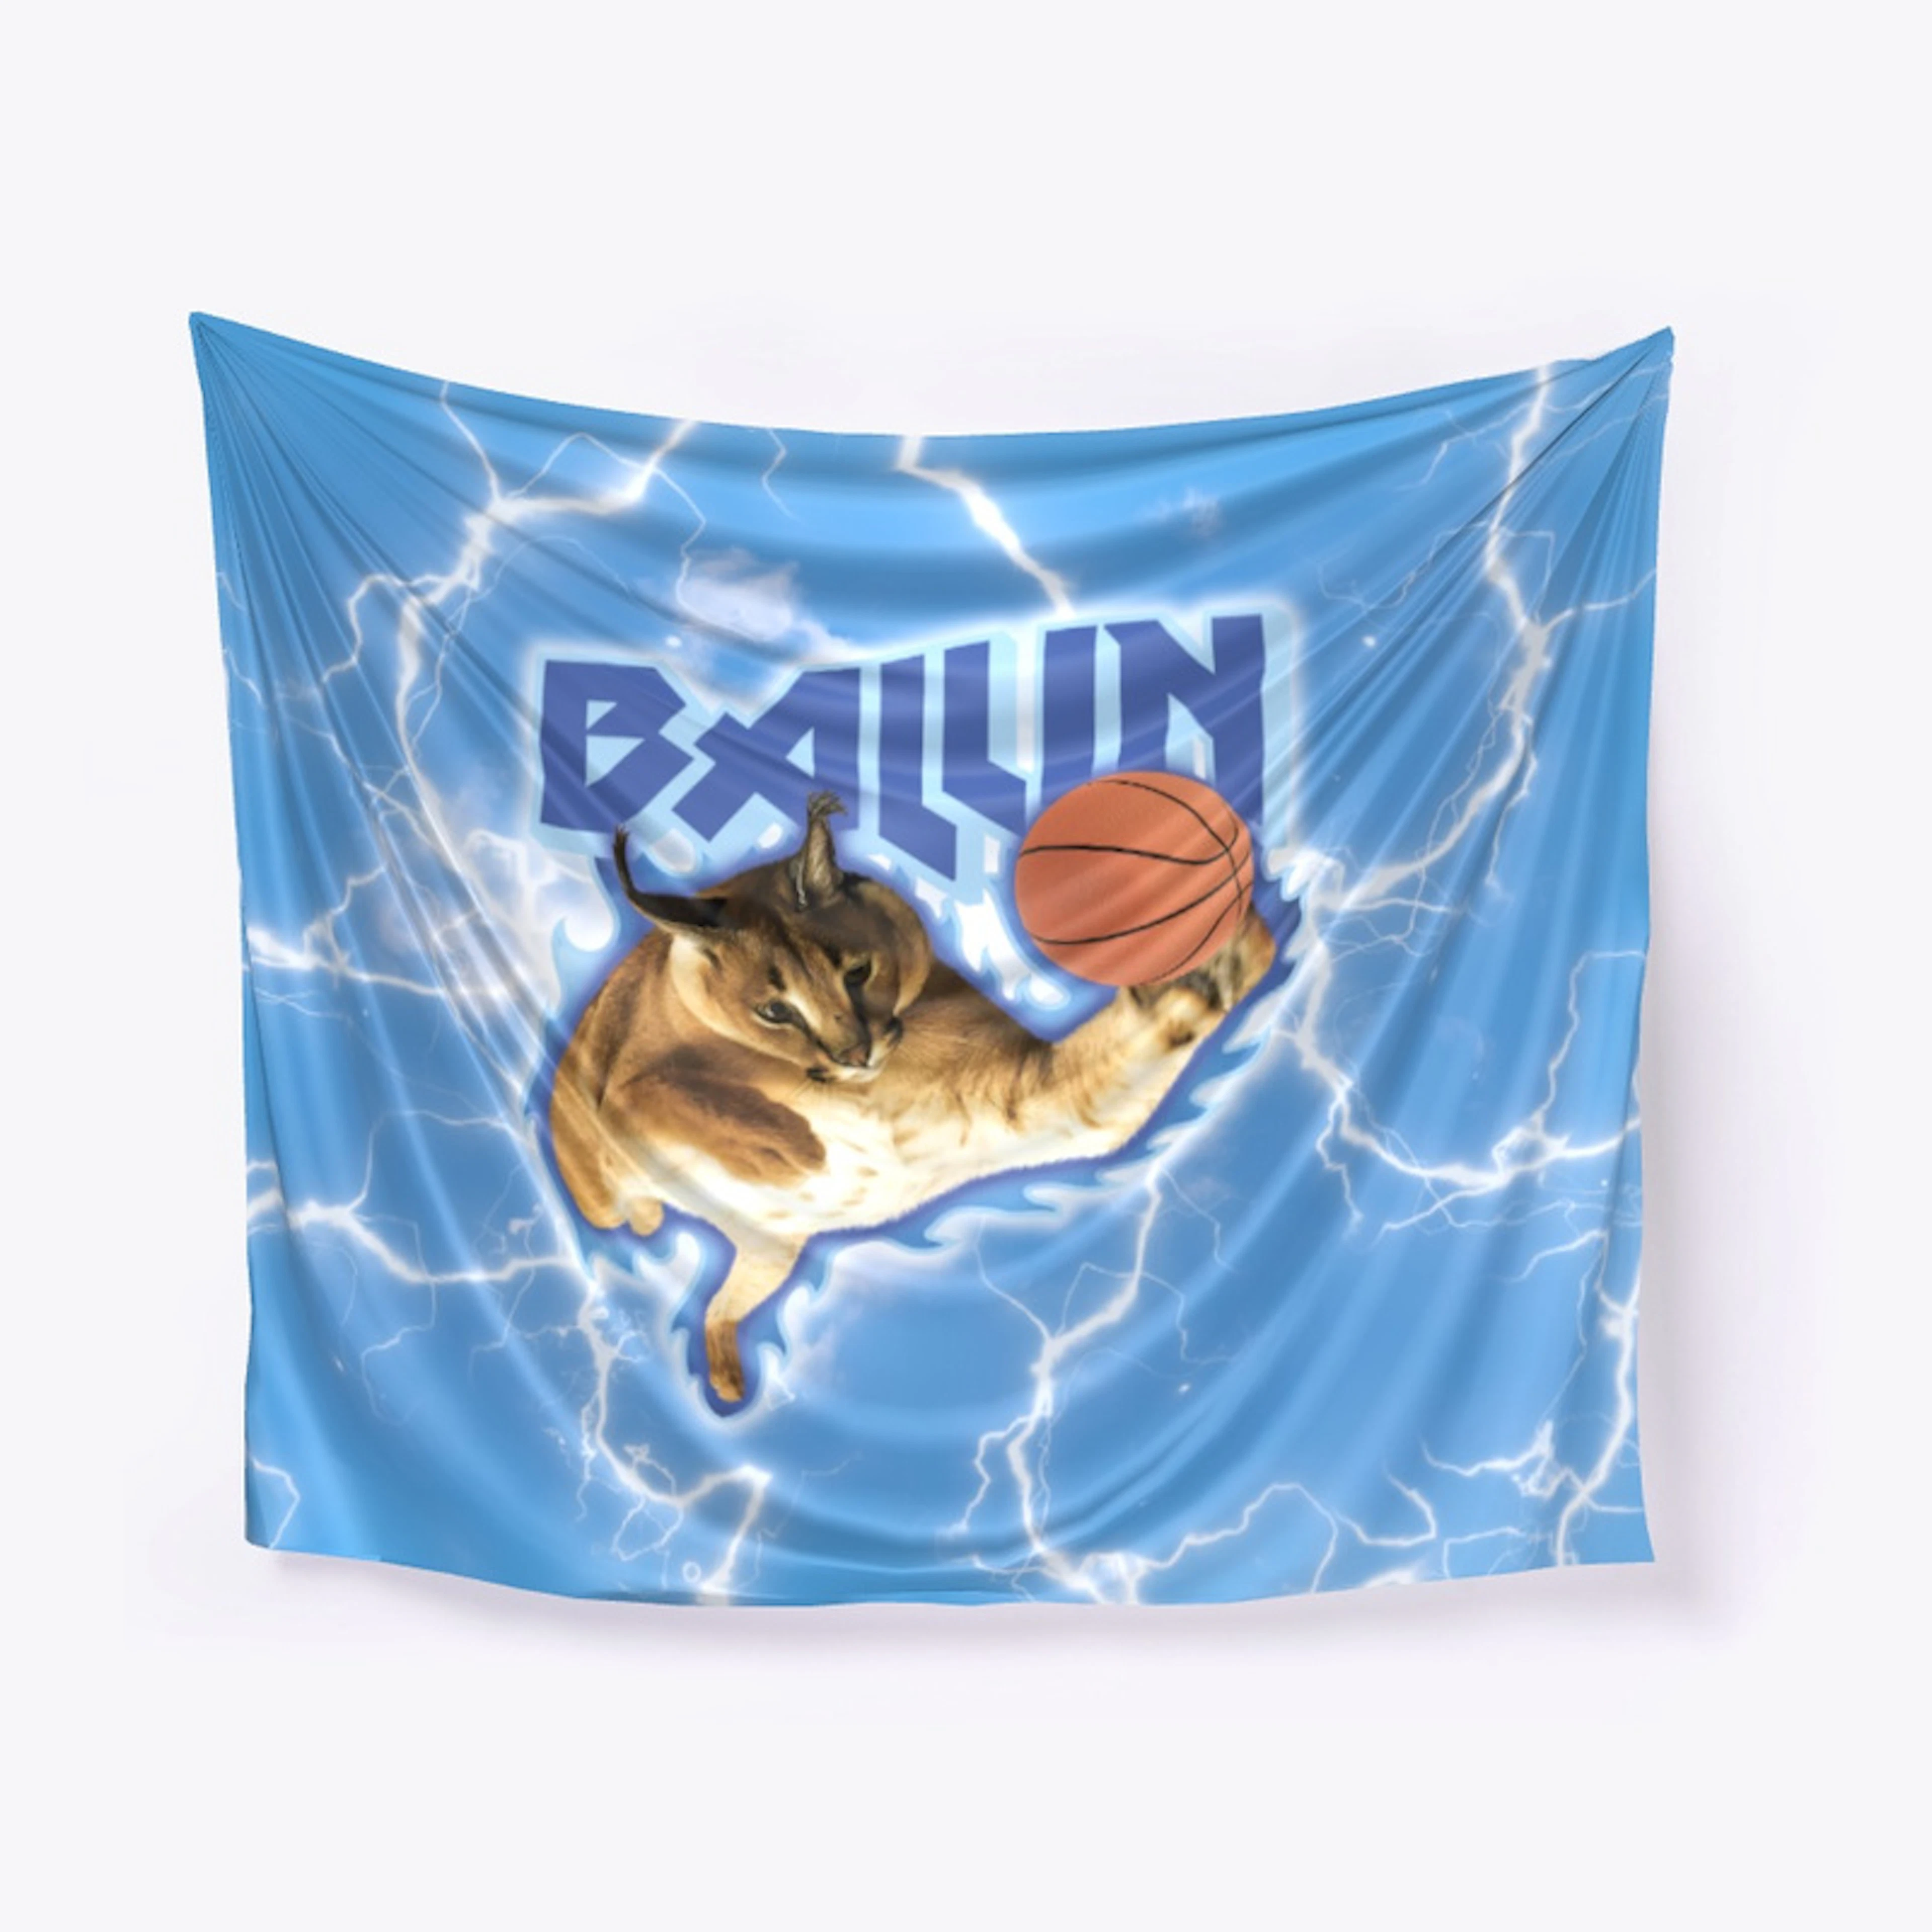 "BALLIN" WALL FLAG